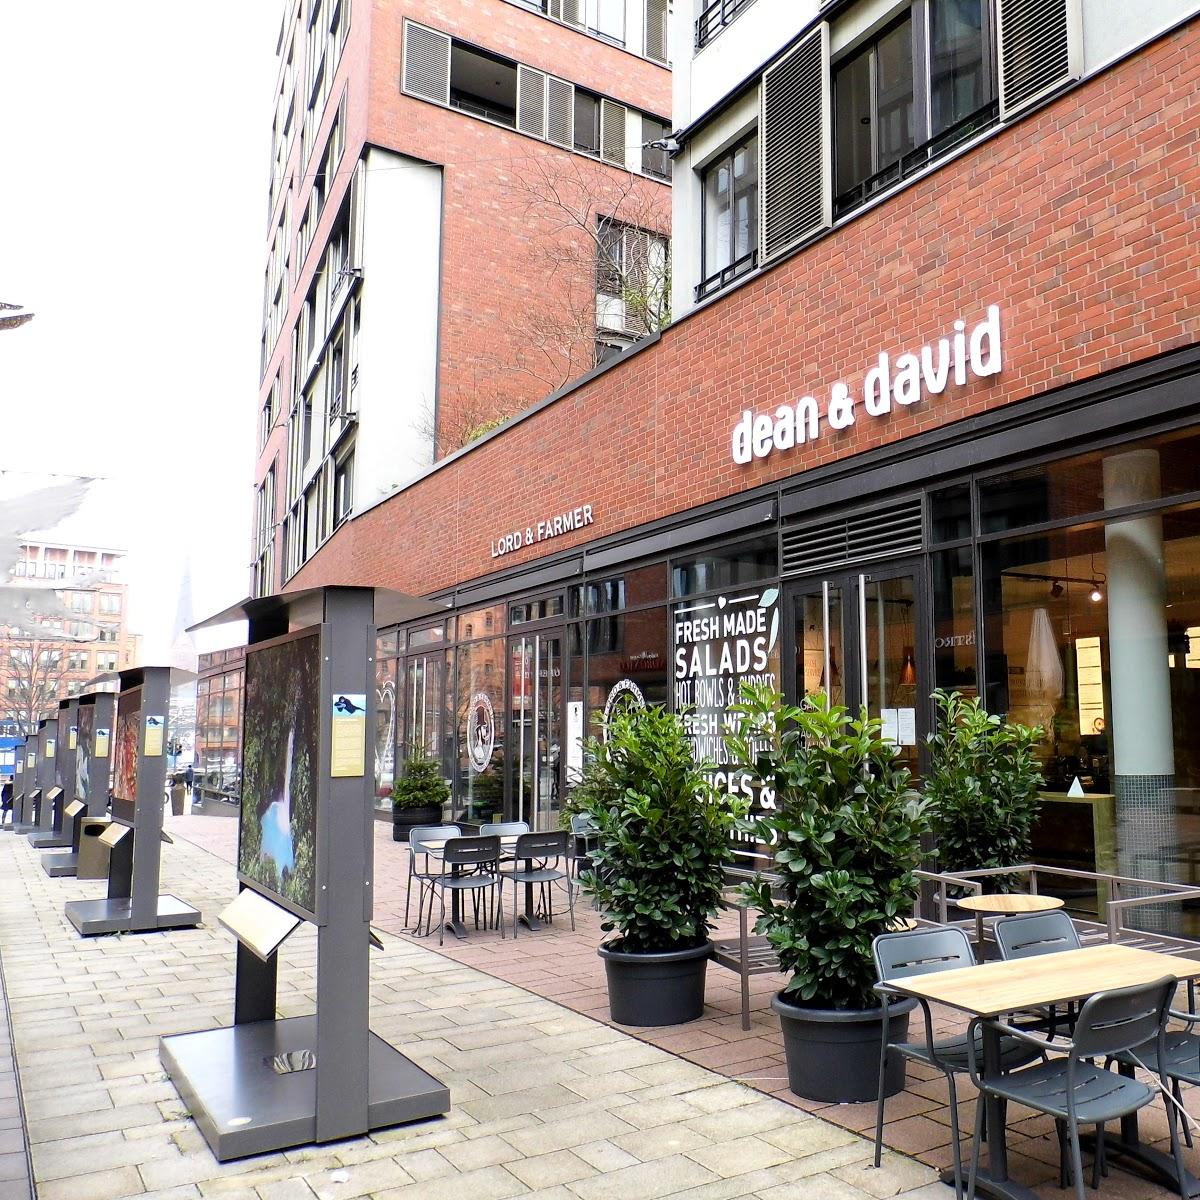 Restaurant "dean&david" in Hamburg